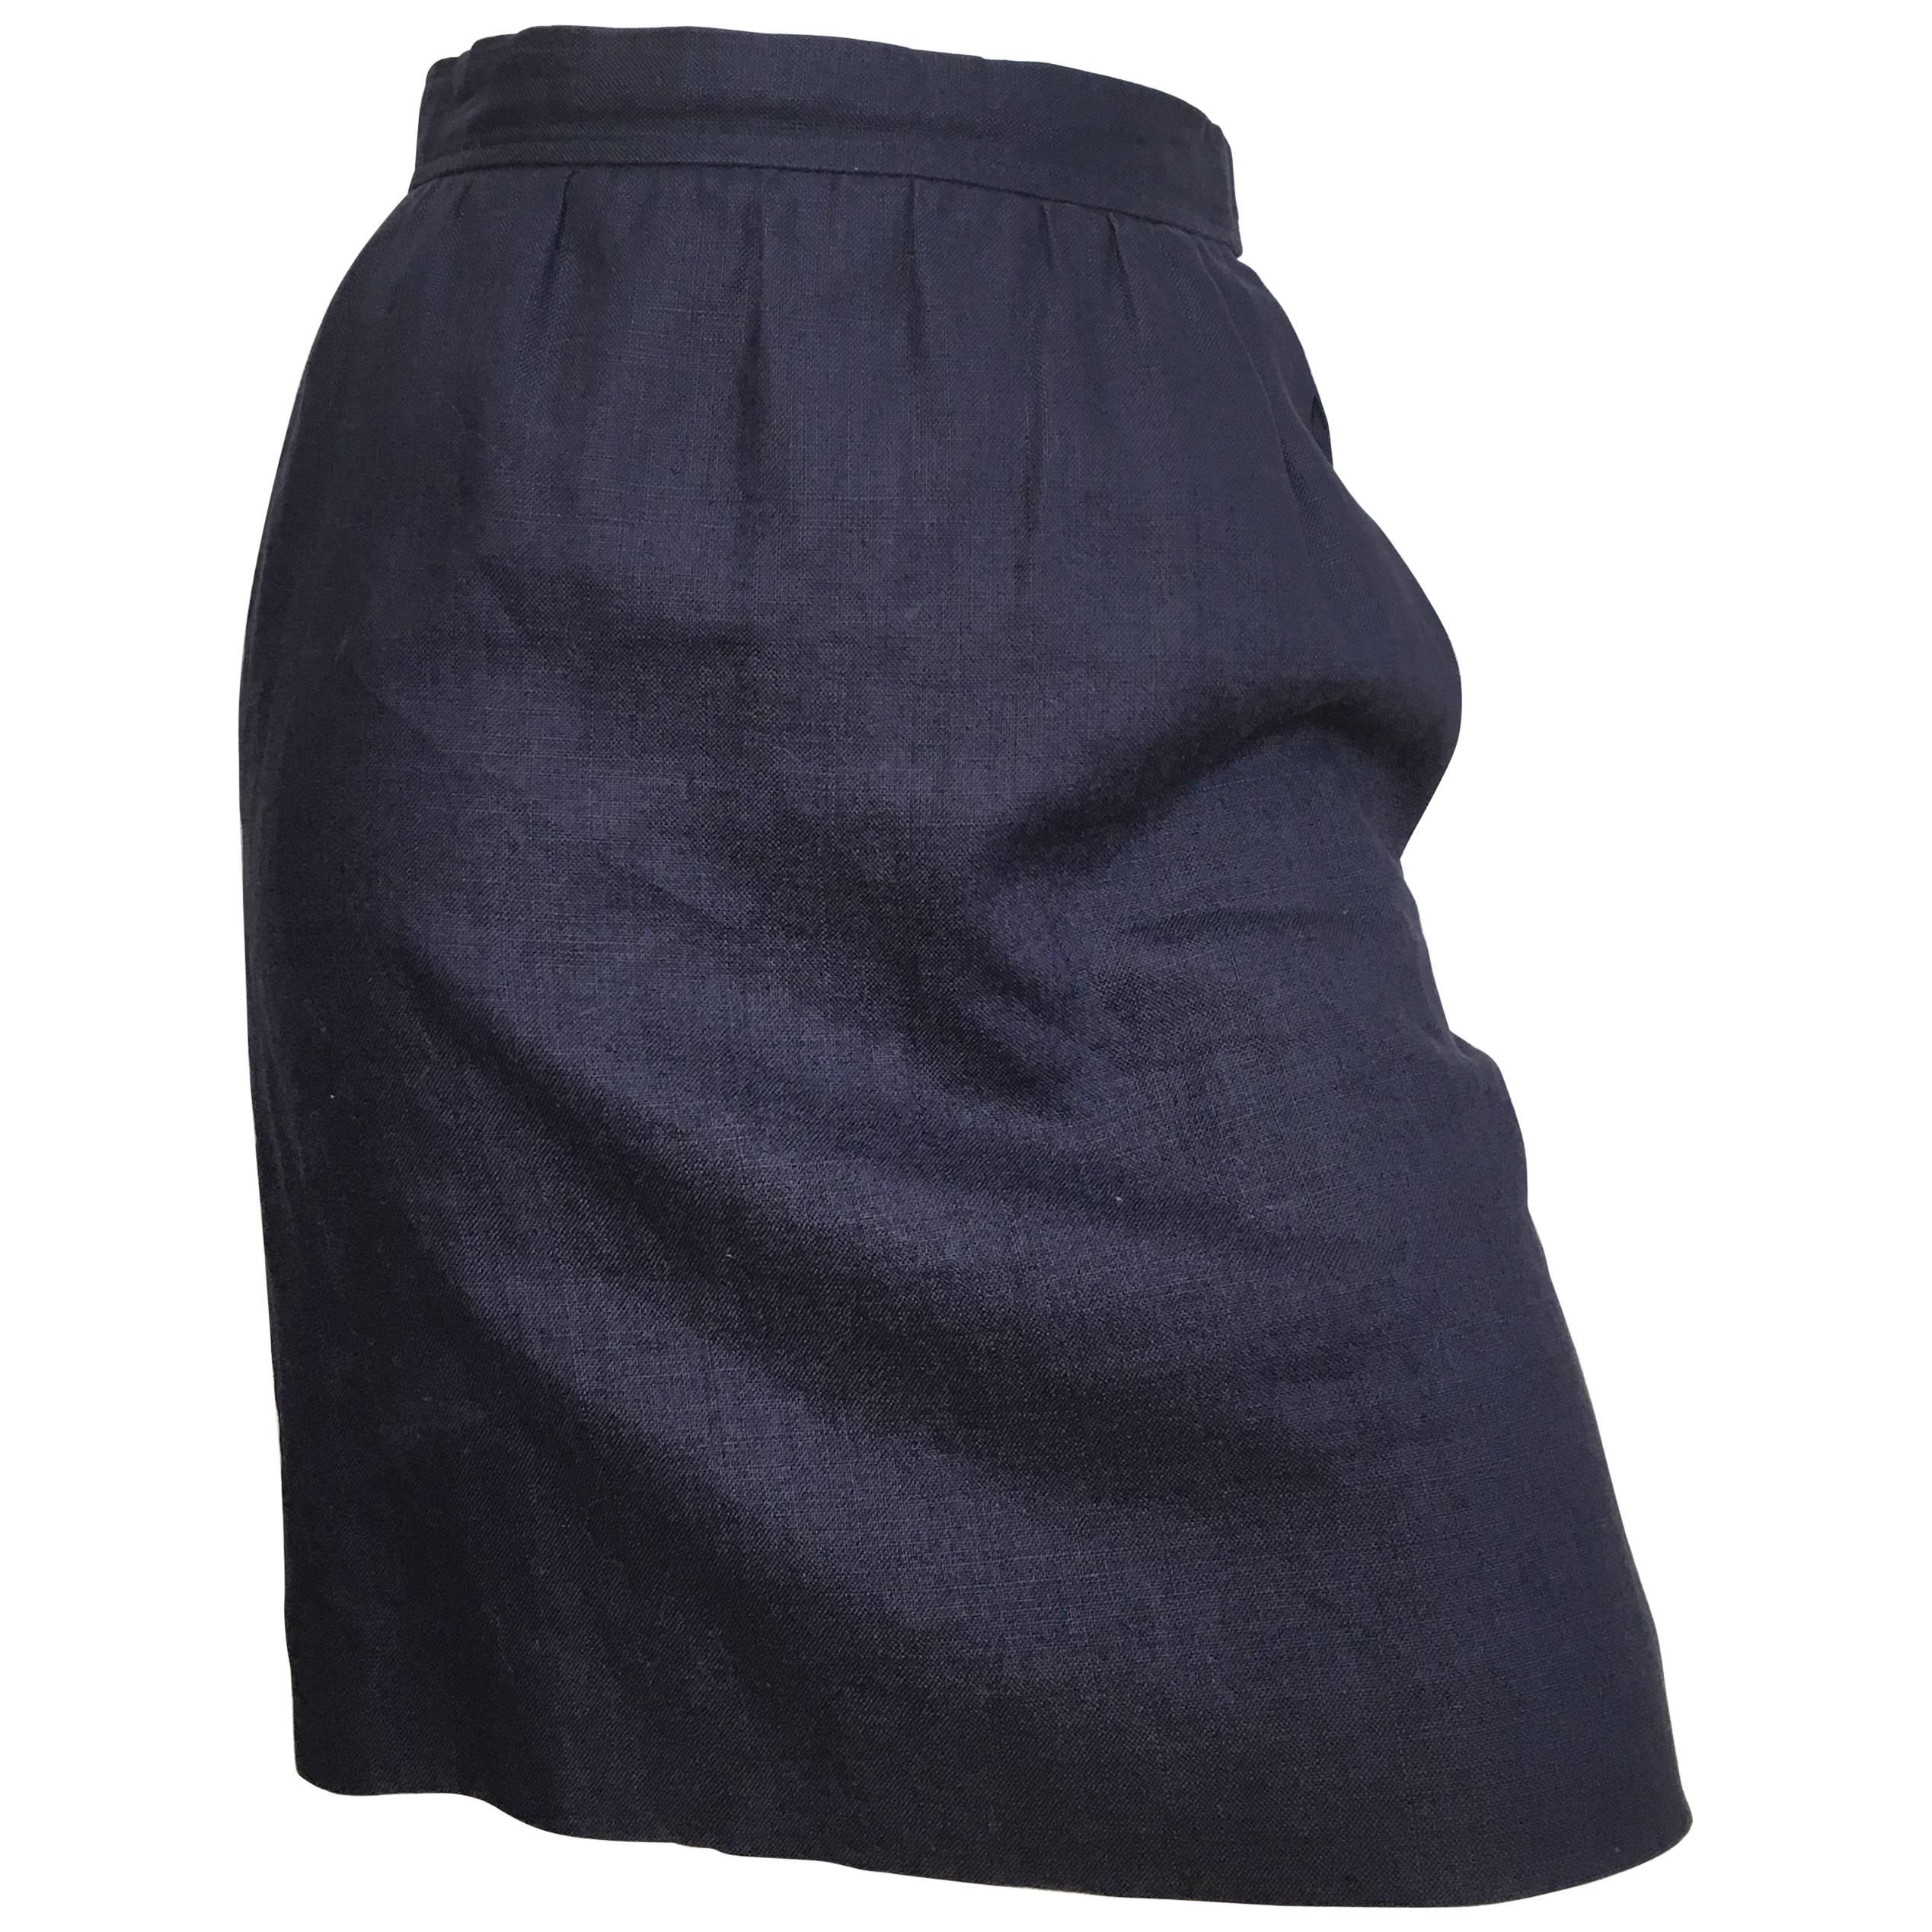 Saint Laurent Rive Gauche 1980s Navy Linen Pencil Skirt with Pockets Size 4. im Angebot